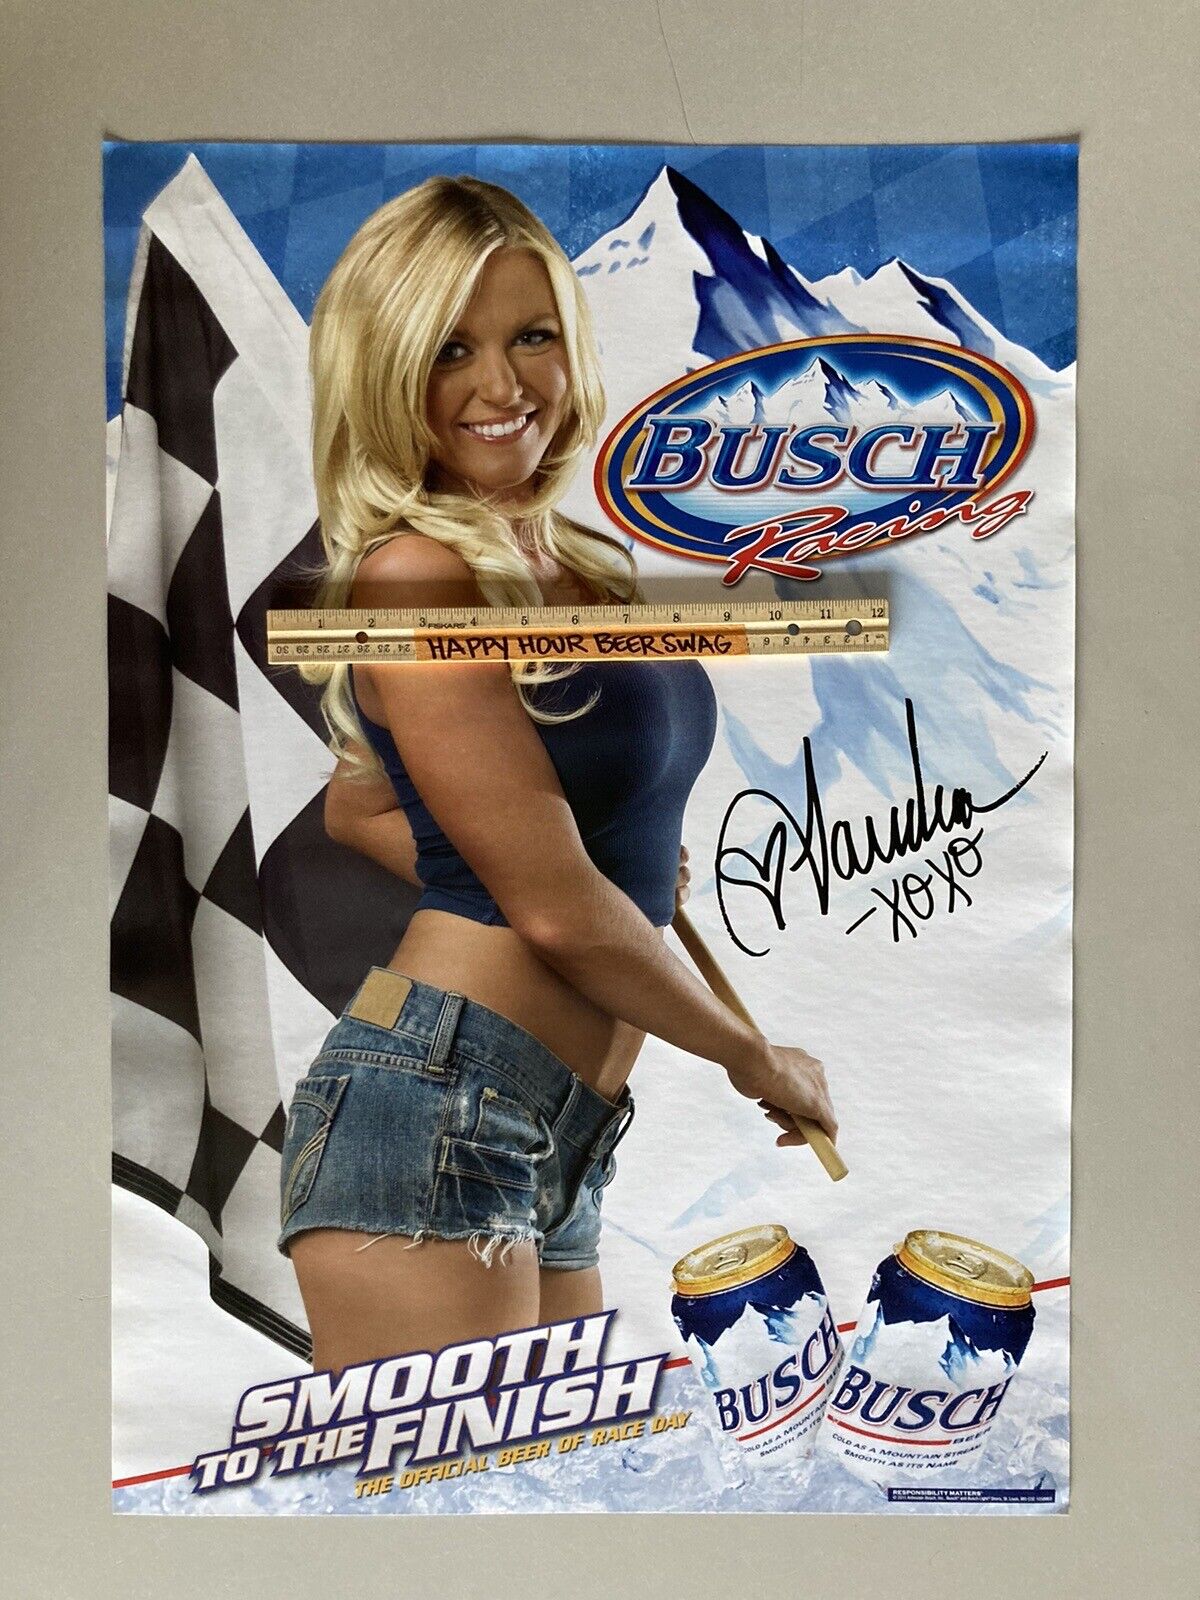 NOS Classic Busch Light NASCAR Racing Model Hot Girl Model Poster Vintage Rare